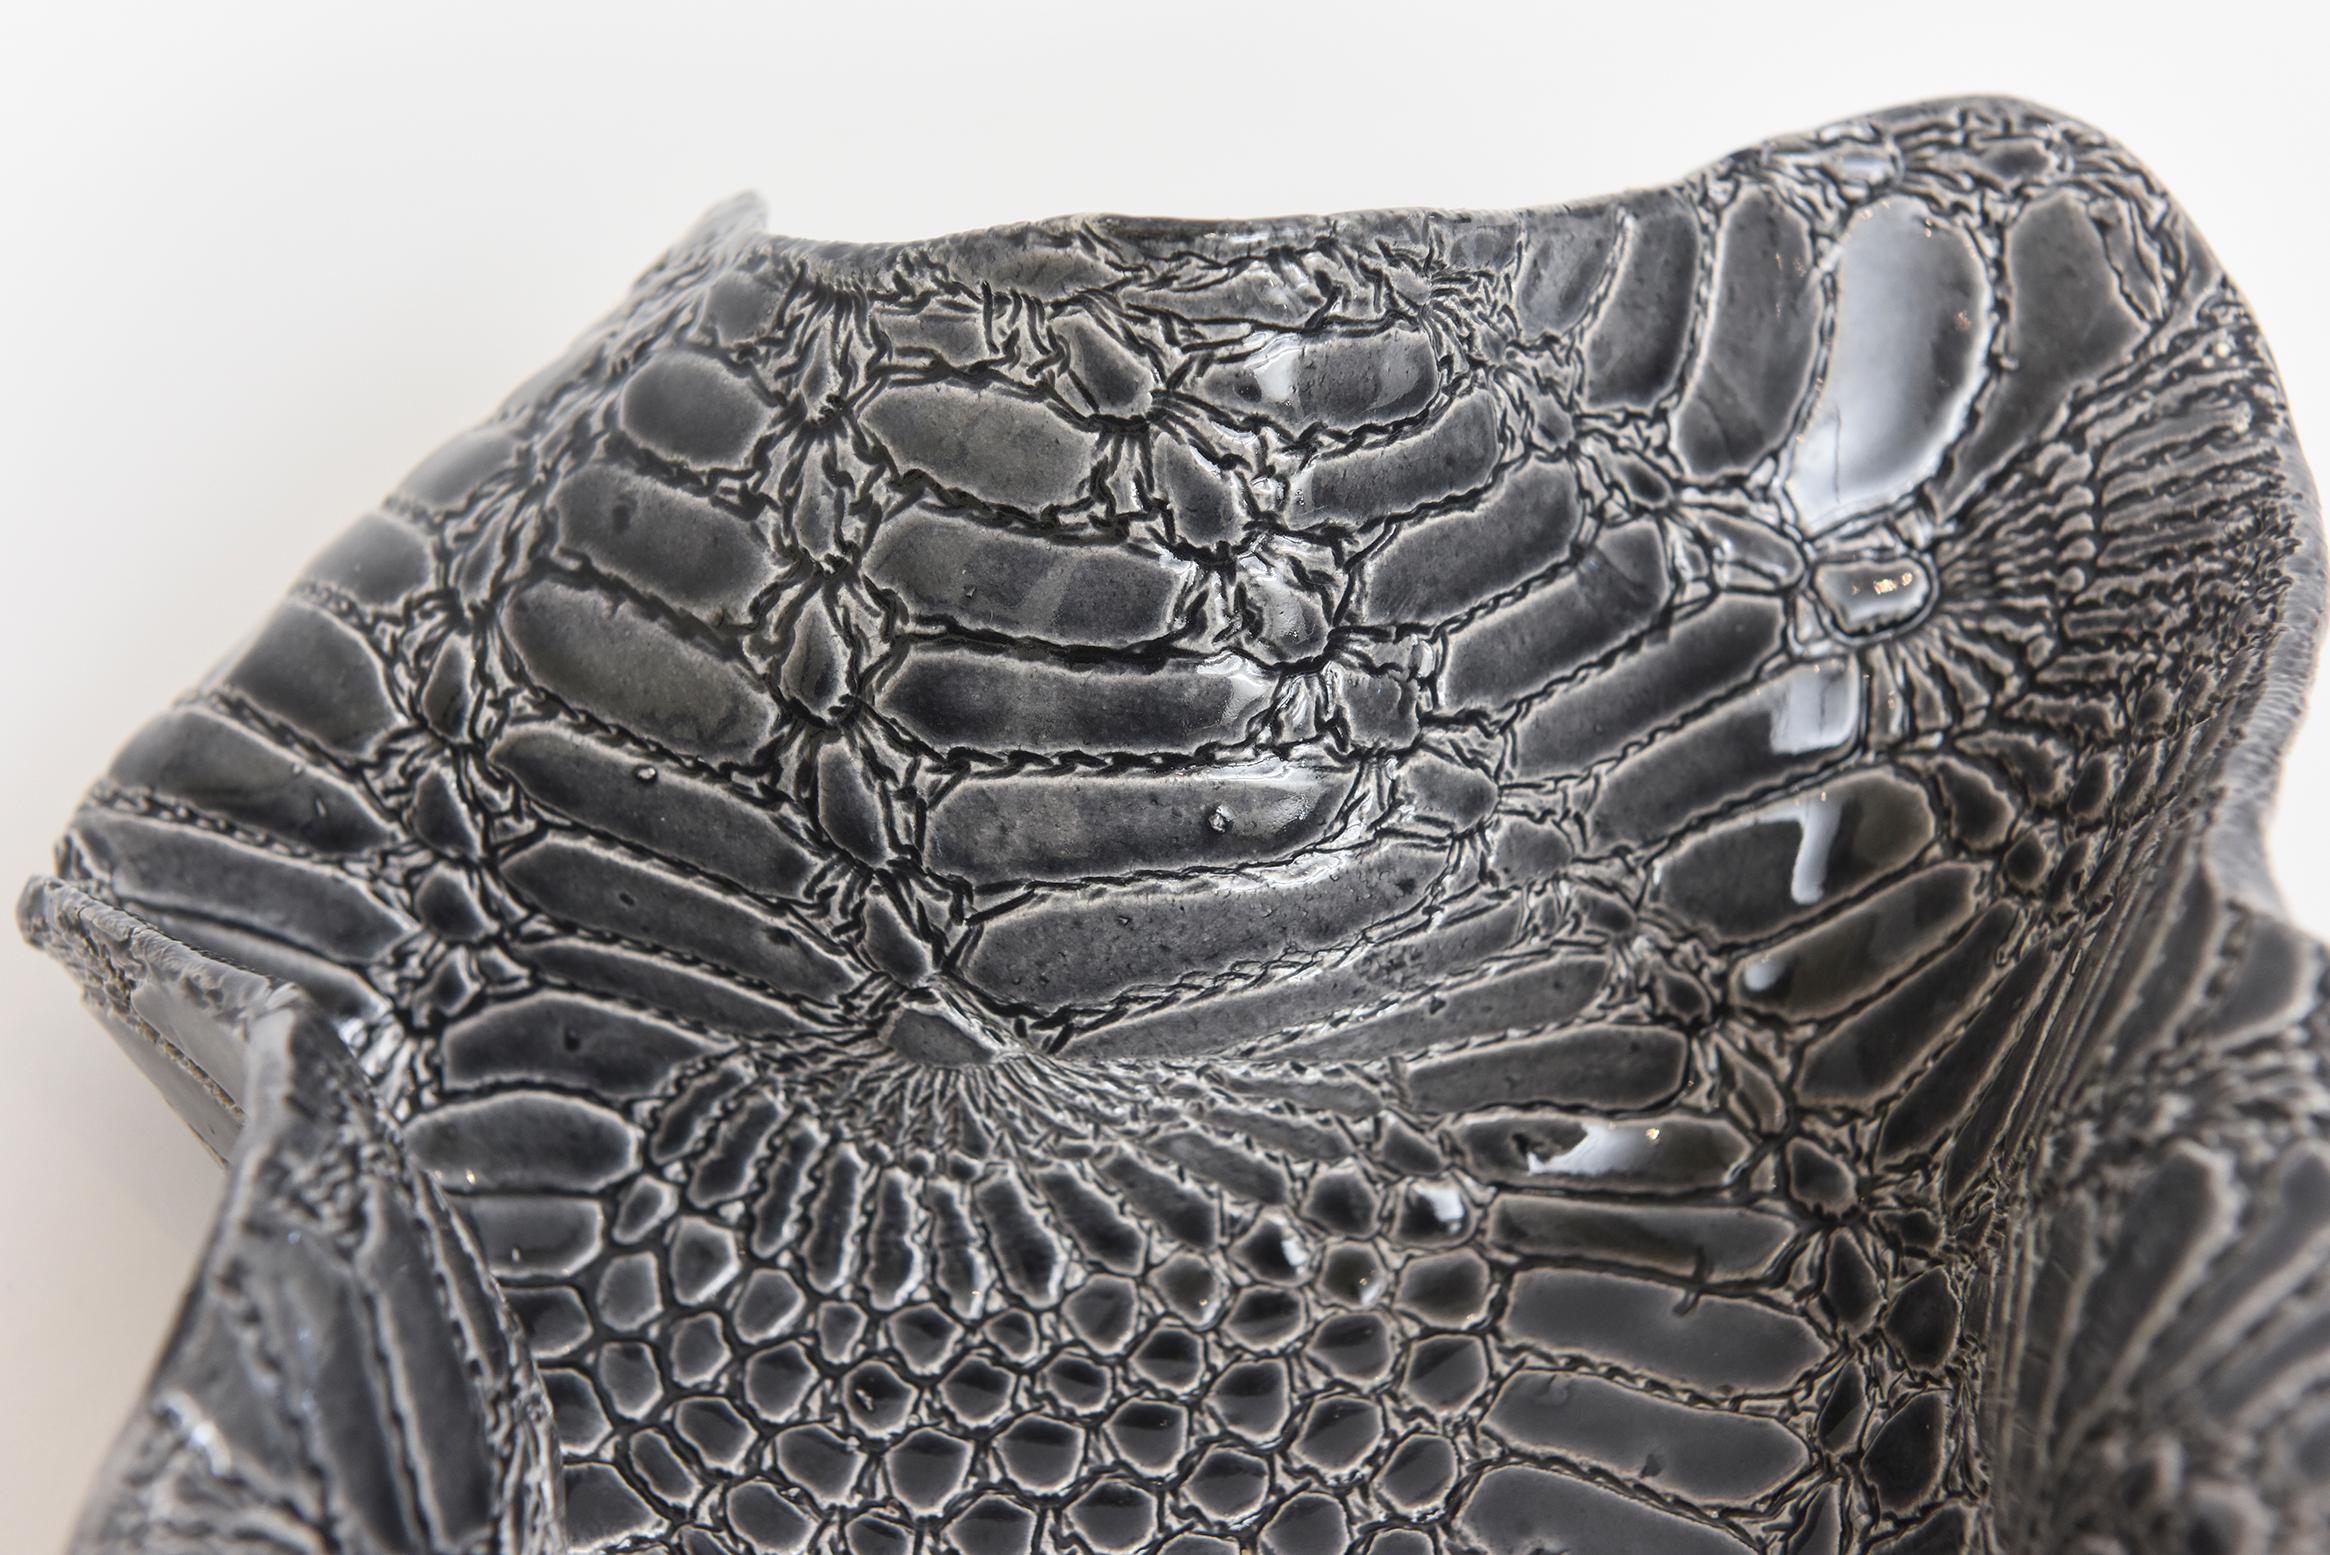 Ceramic Textural Snakeskin Pattern Grey White Biomorphic Sculptural Bowl For Sale 2